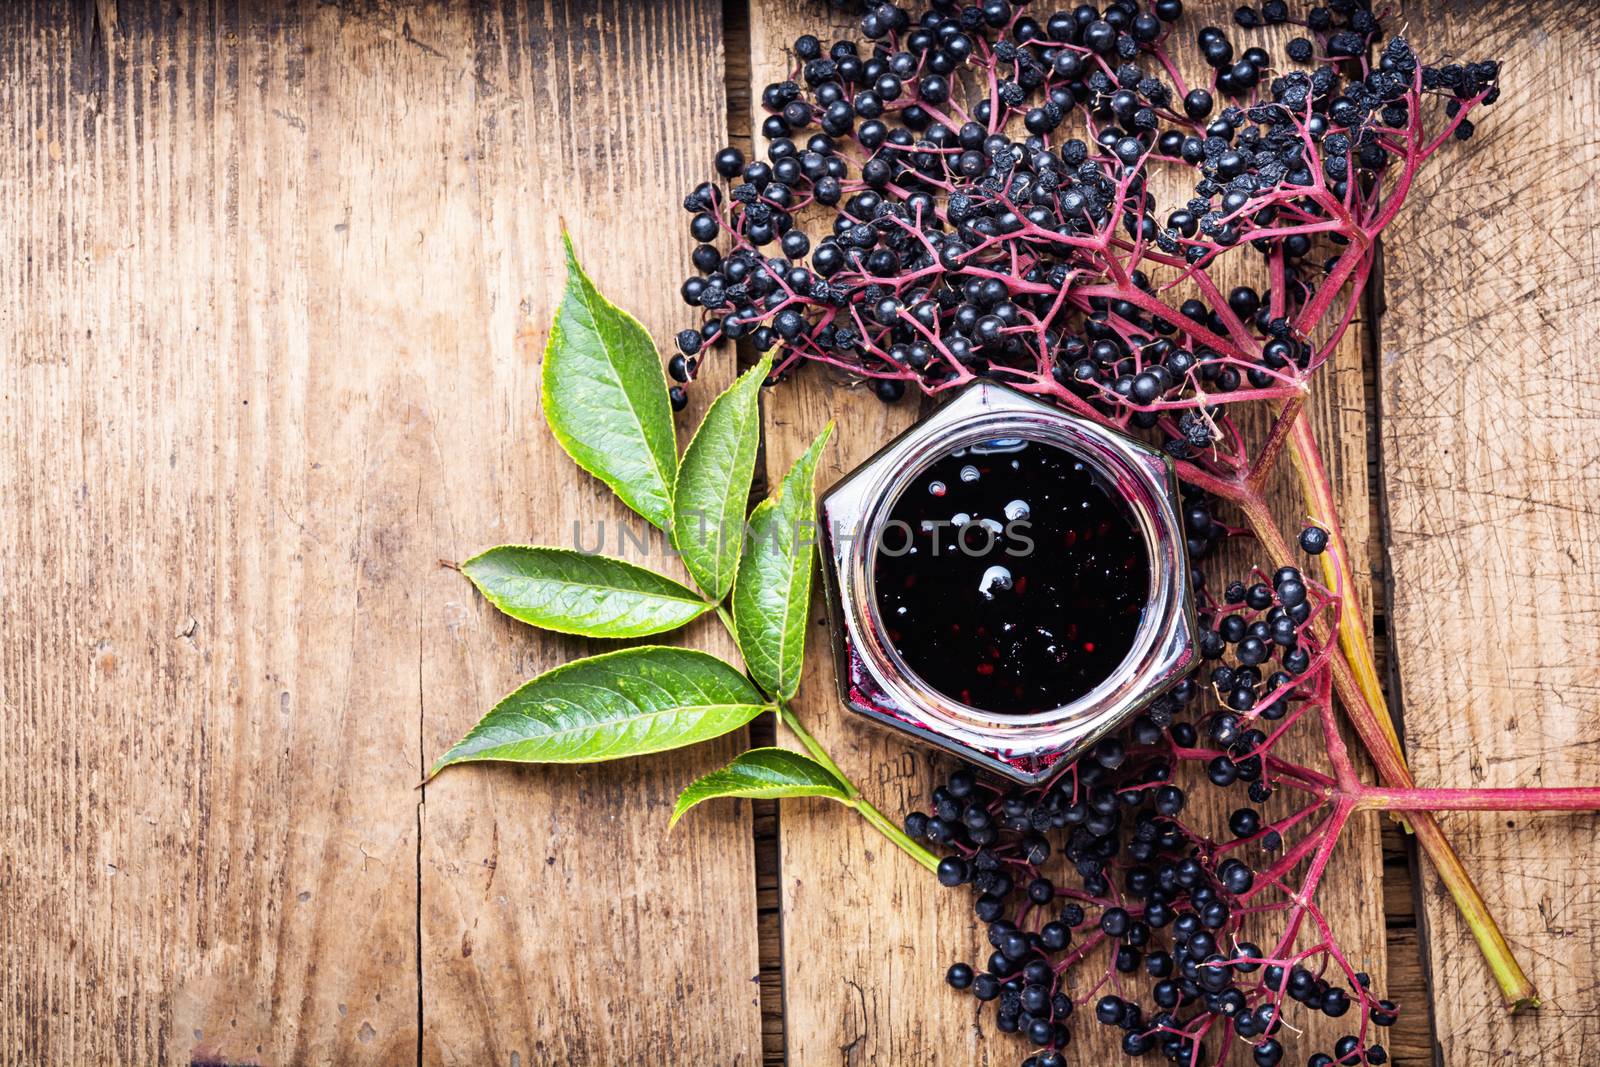 Elderberry jam and fresh berries.Homemade jam.Space for text